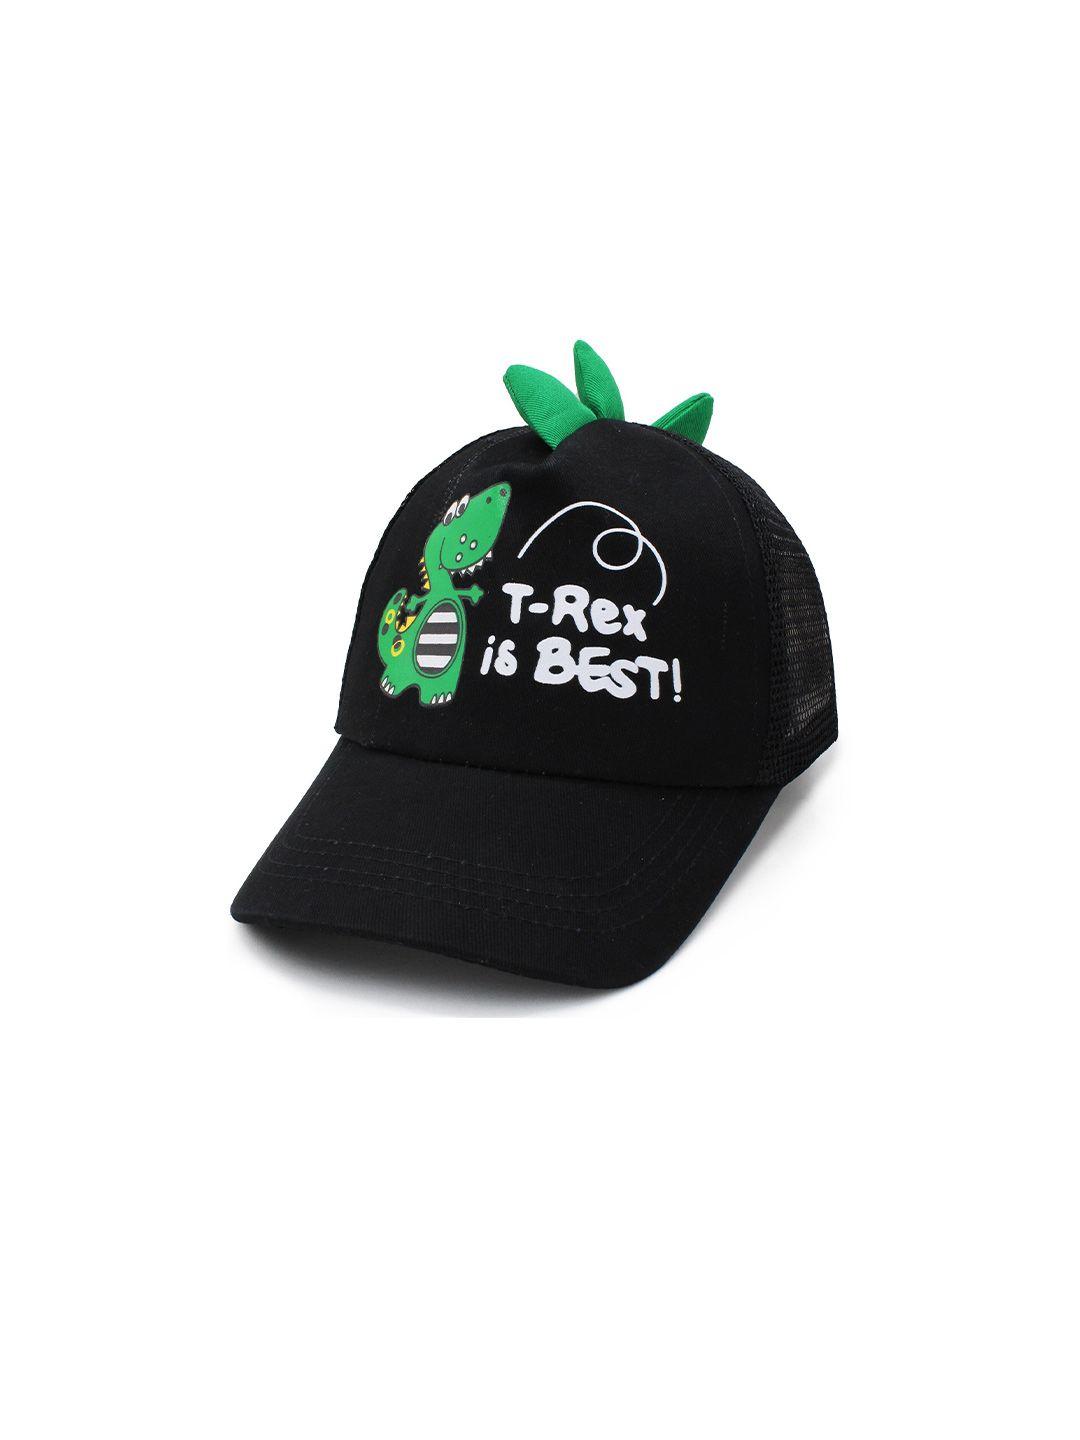 jenna boys black & green printed baseball cap